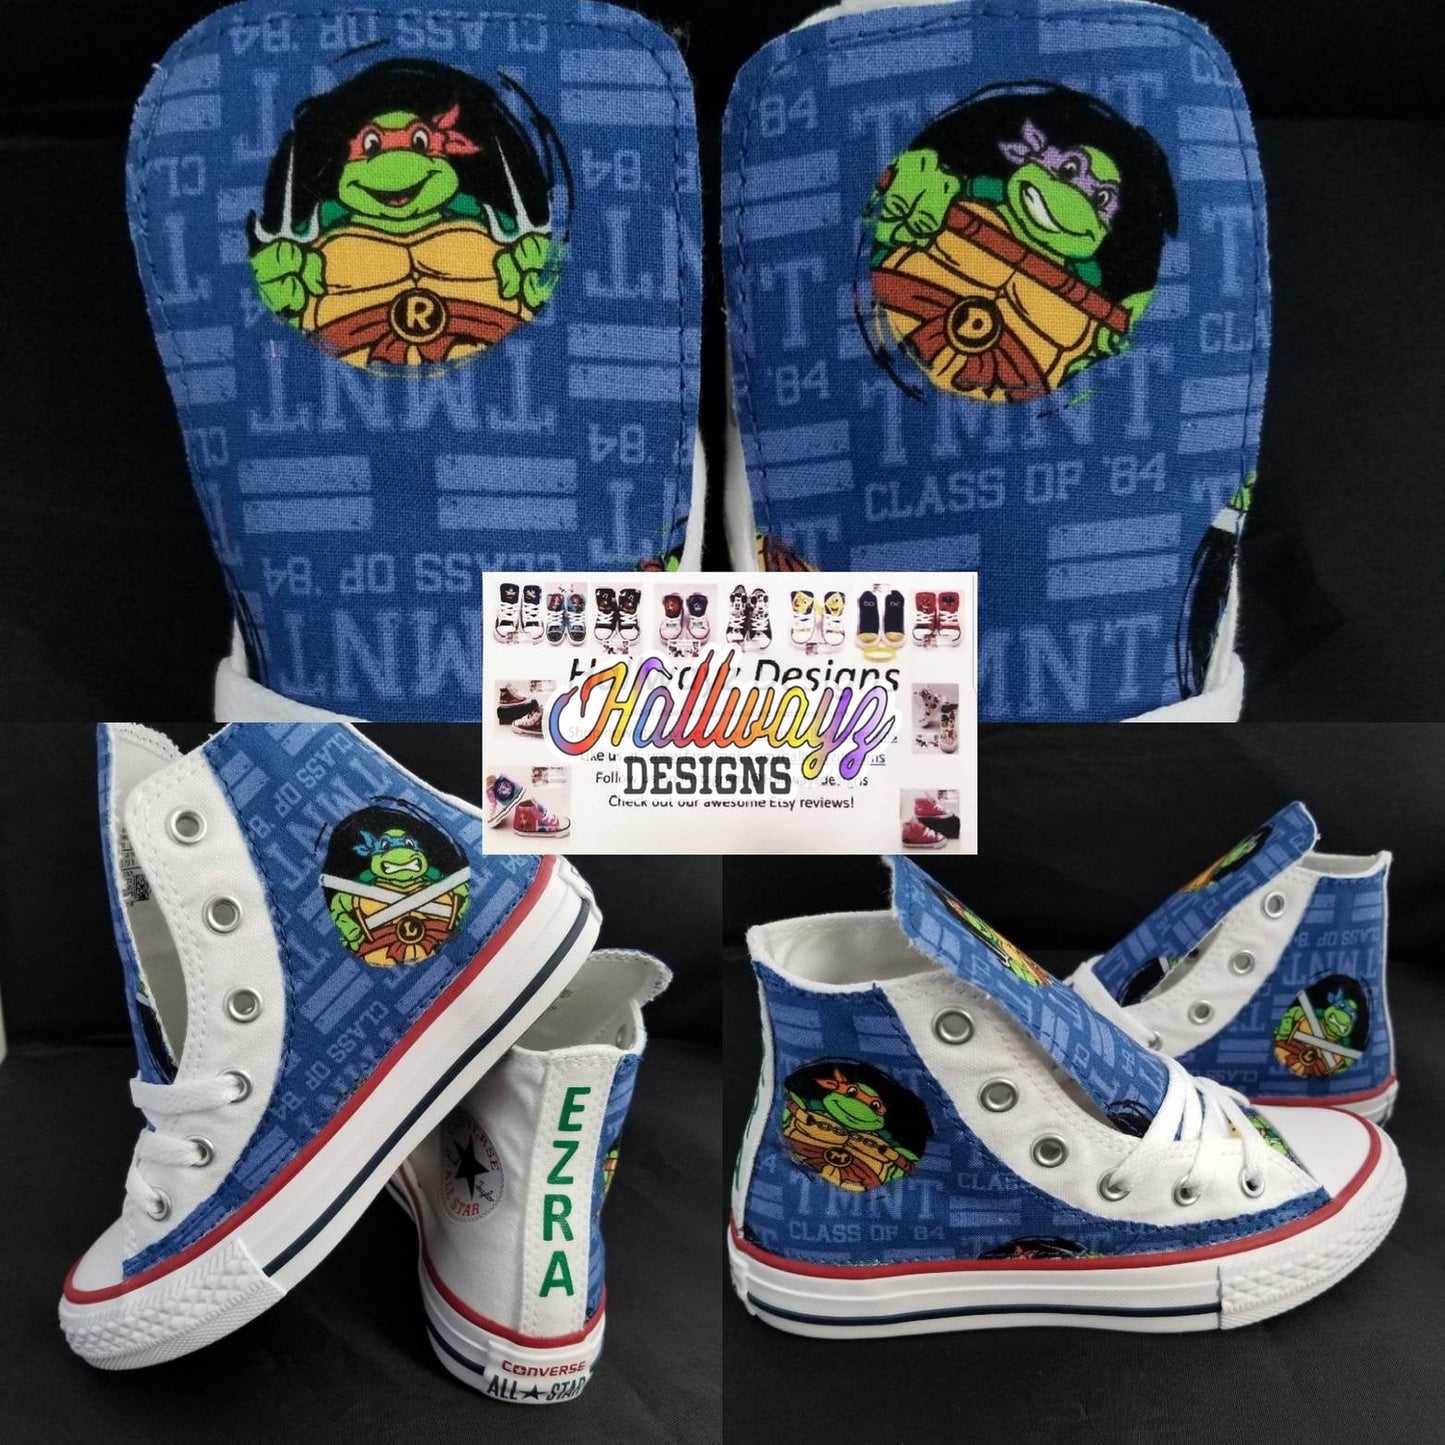 Ninja Turtles Converse Shoes